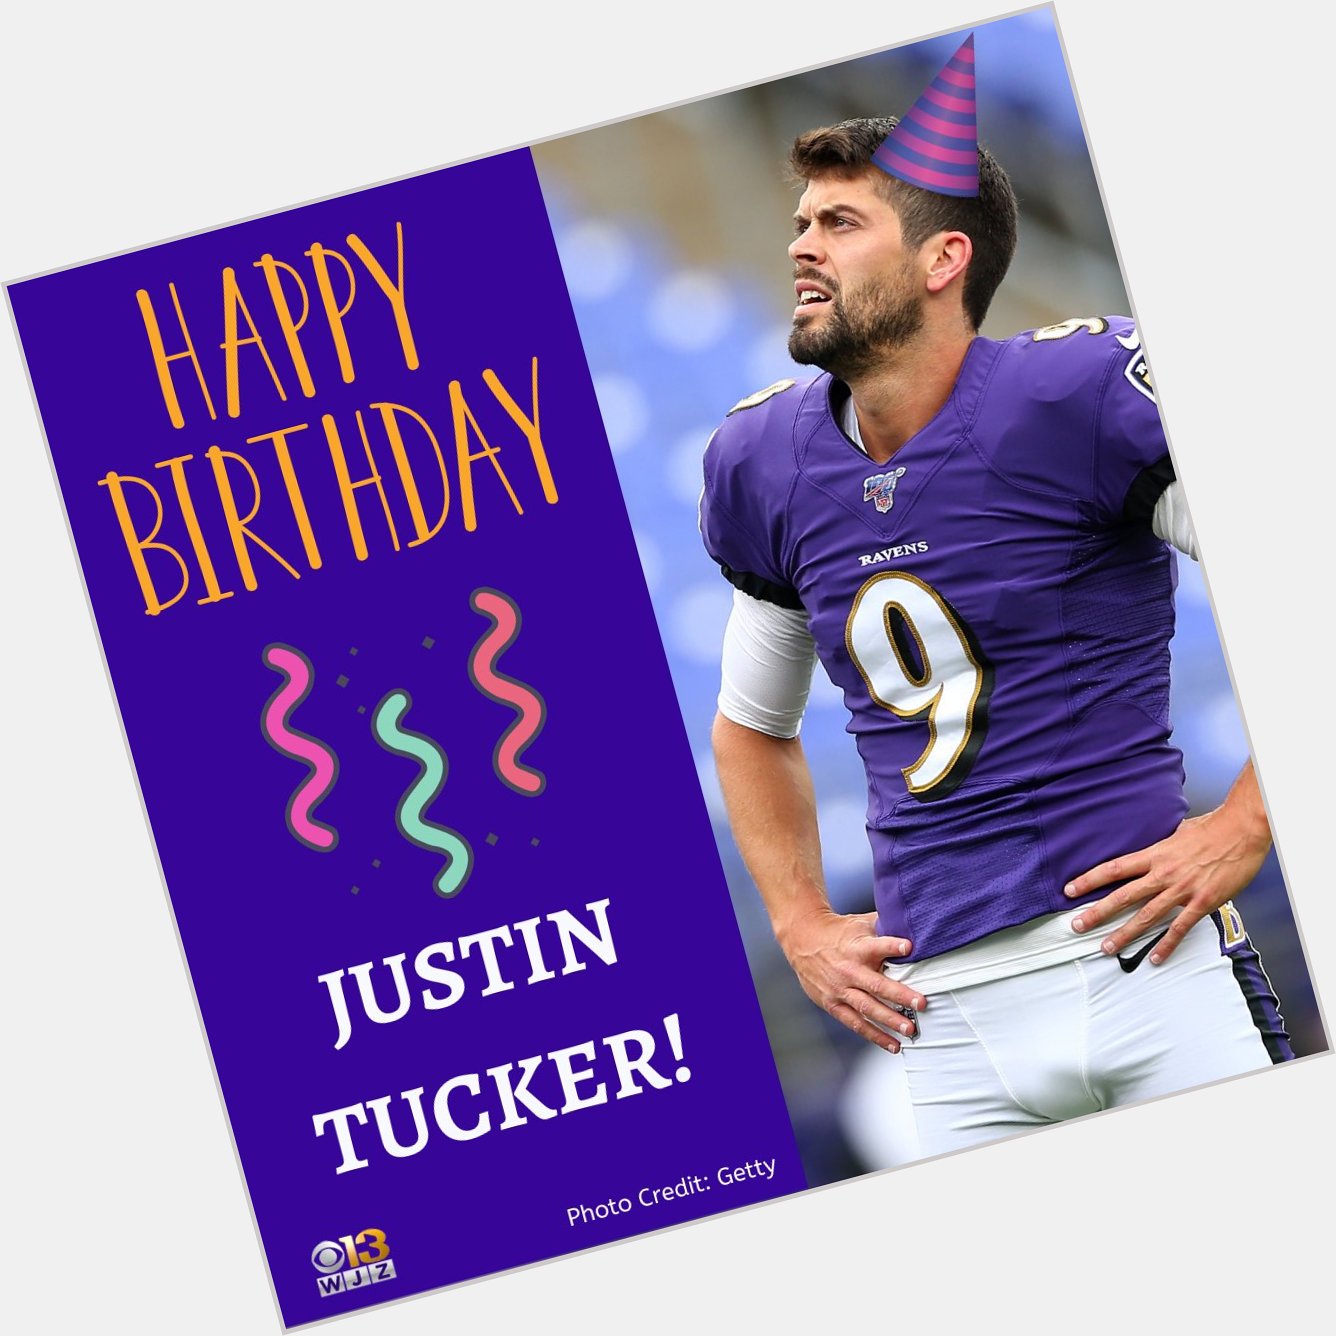 Happy Birthday, Justin Tucker!  